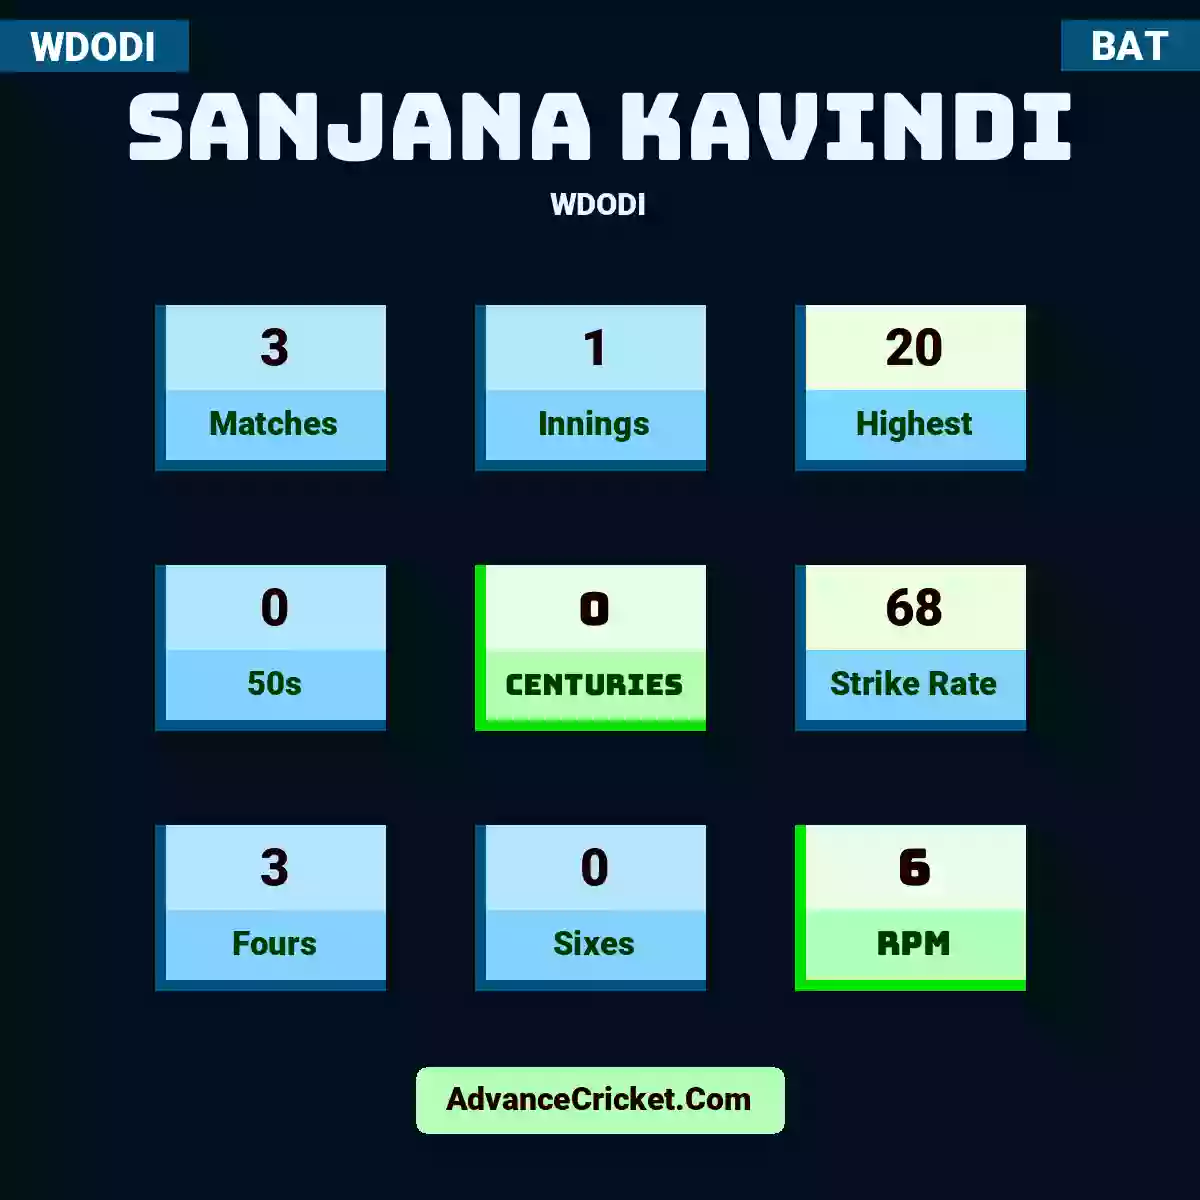 Sanjana Kavindi WDODI , Sanjana Kavindi played 3 matches, scored 20 runs as highest, 0 half-centuries, and 0 centuries, with a strike rate of 68. S.Kavindi hit 3 fours and 0 sixes, with an RPM of 6.